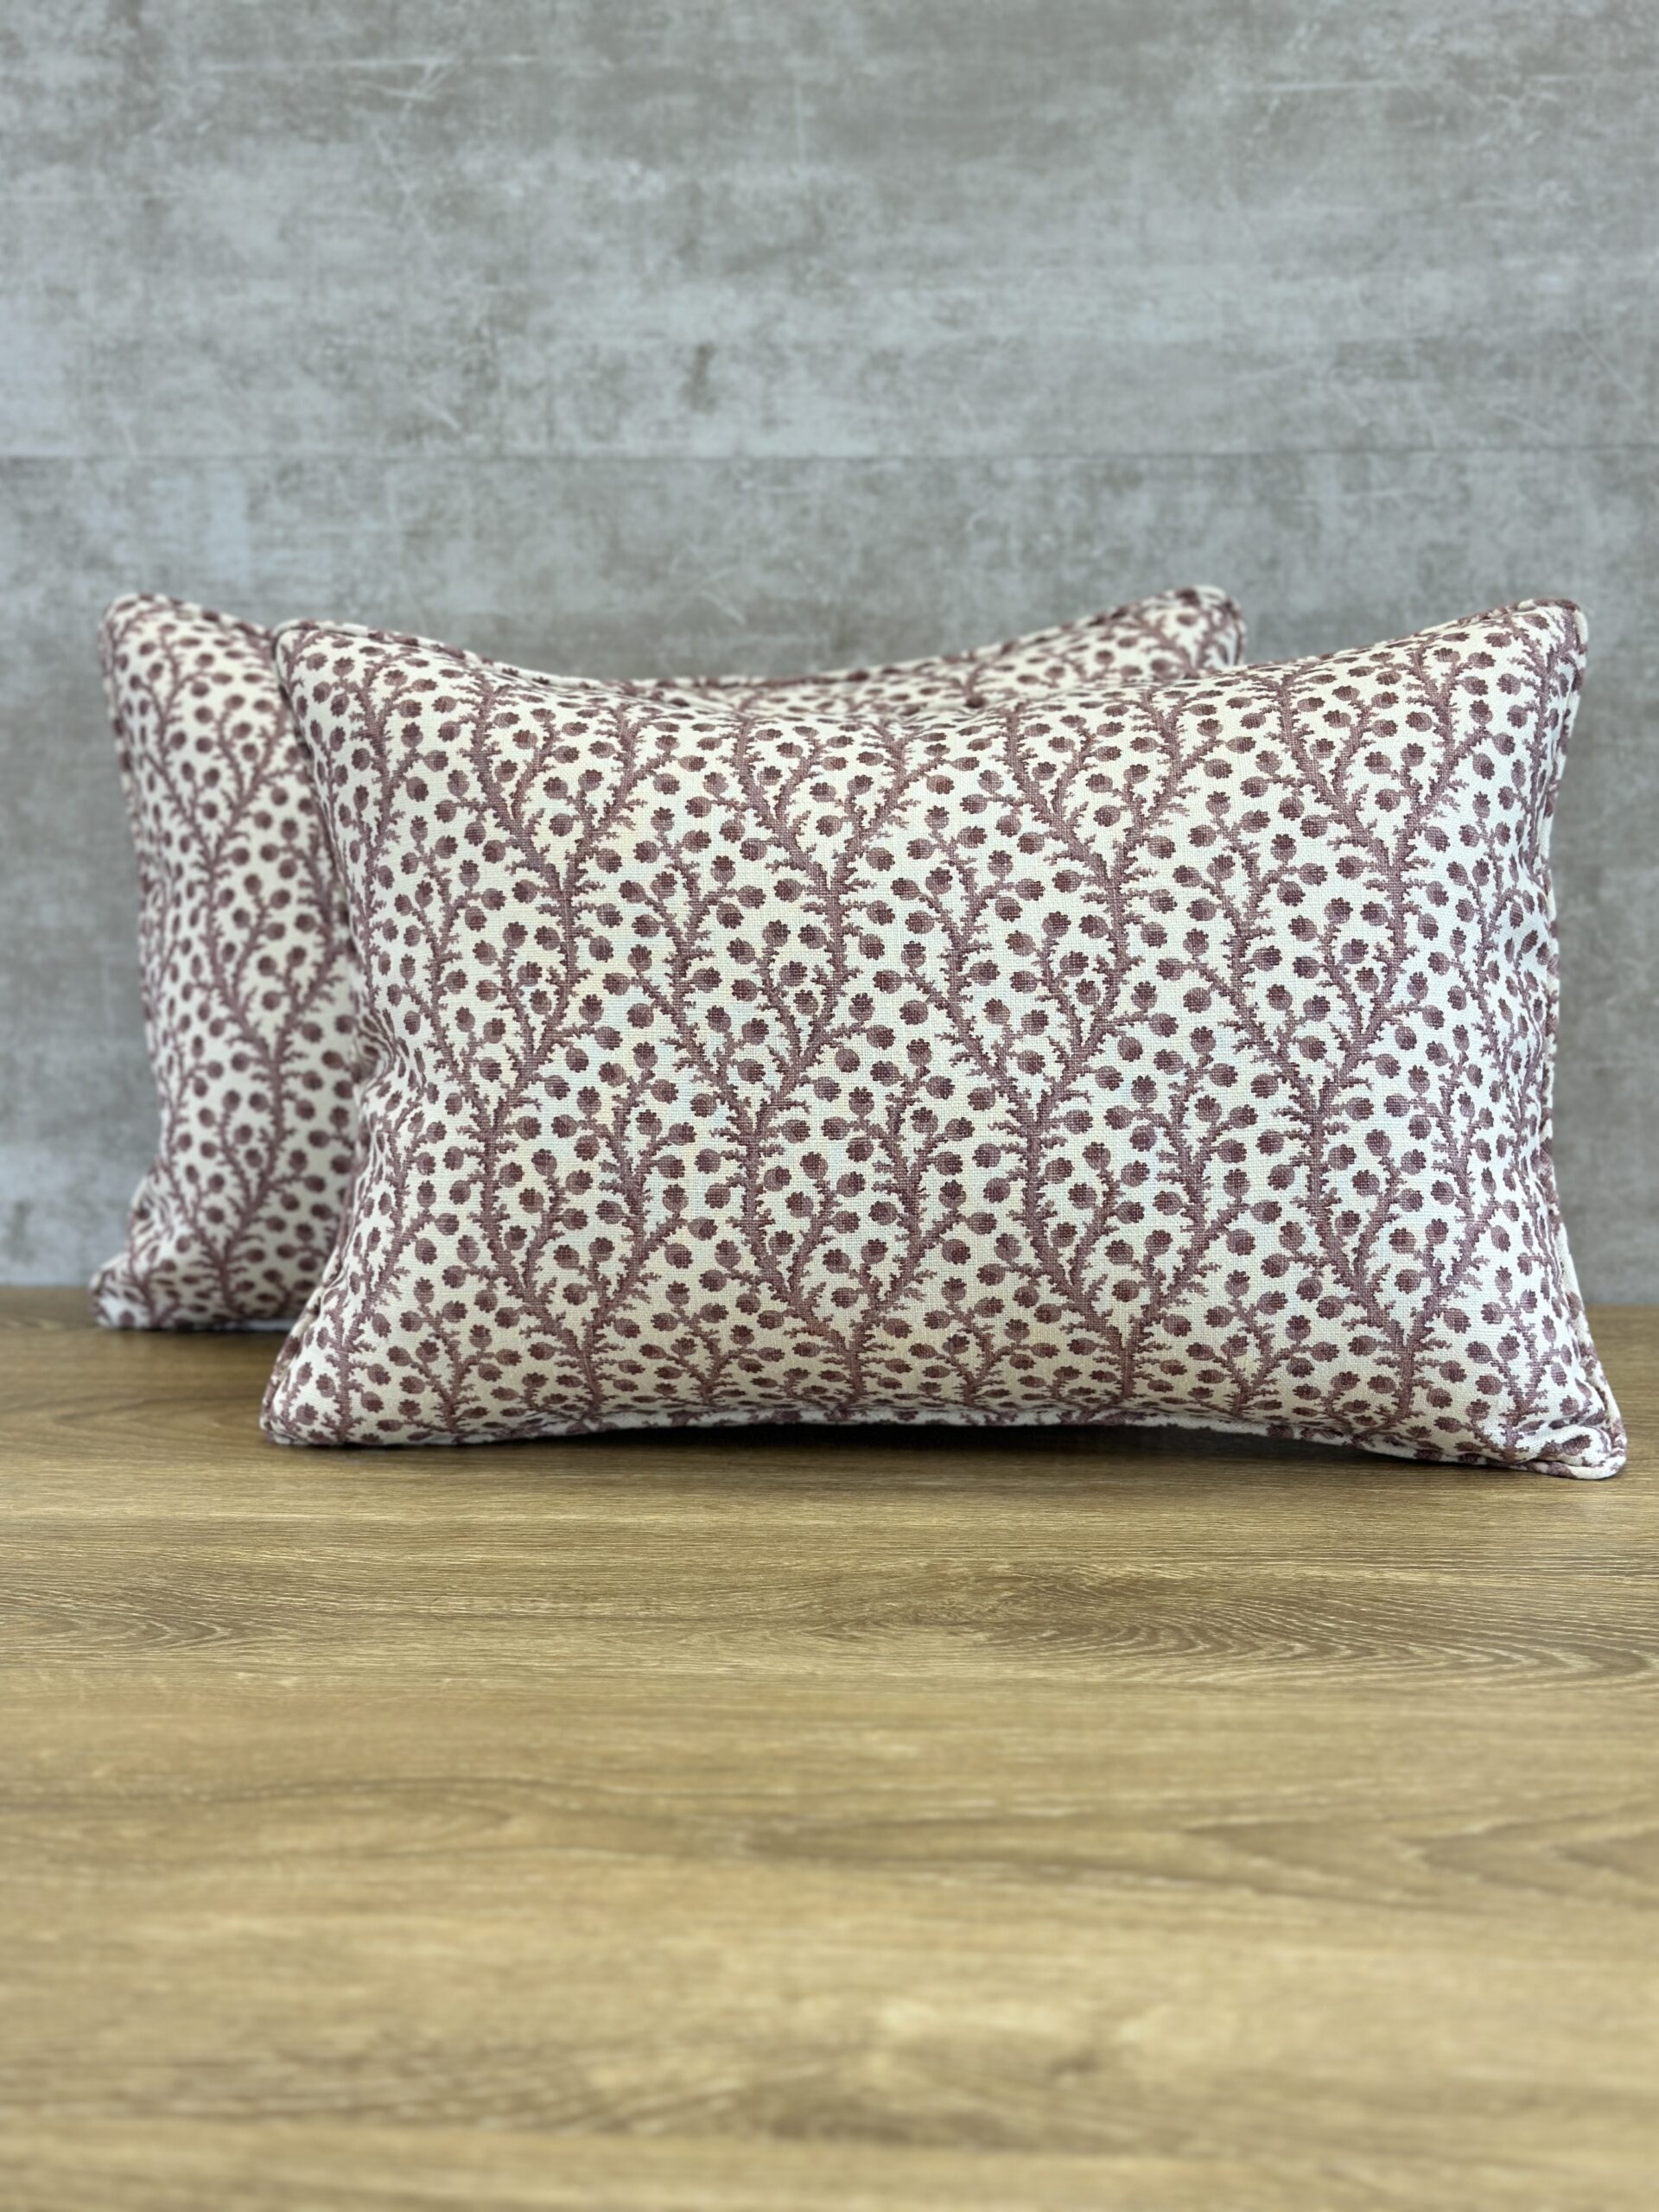 Jean Monro Waterberry Pillows